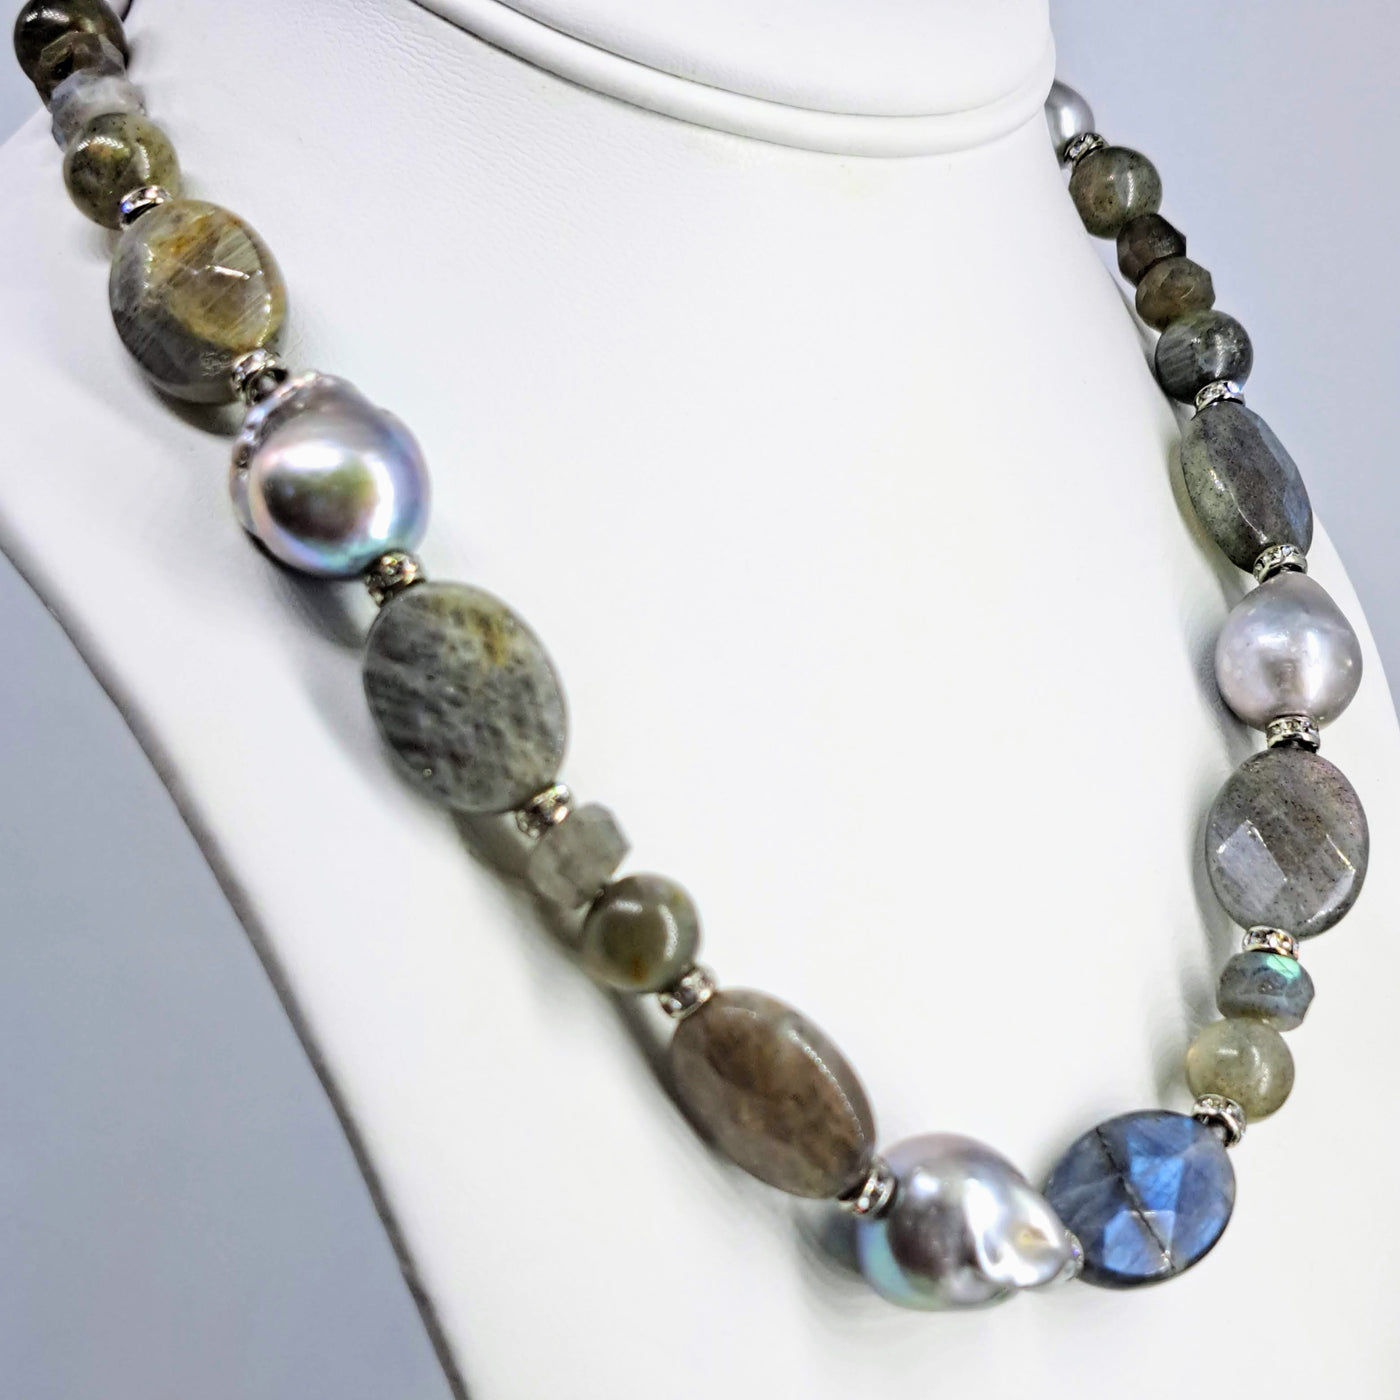 "Gulf Stream" Pendant Necklace - Labradorite, Pearls, Crystals